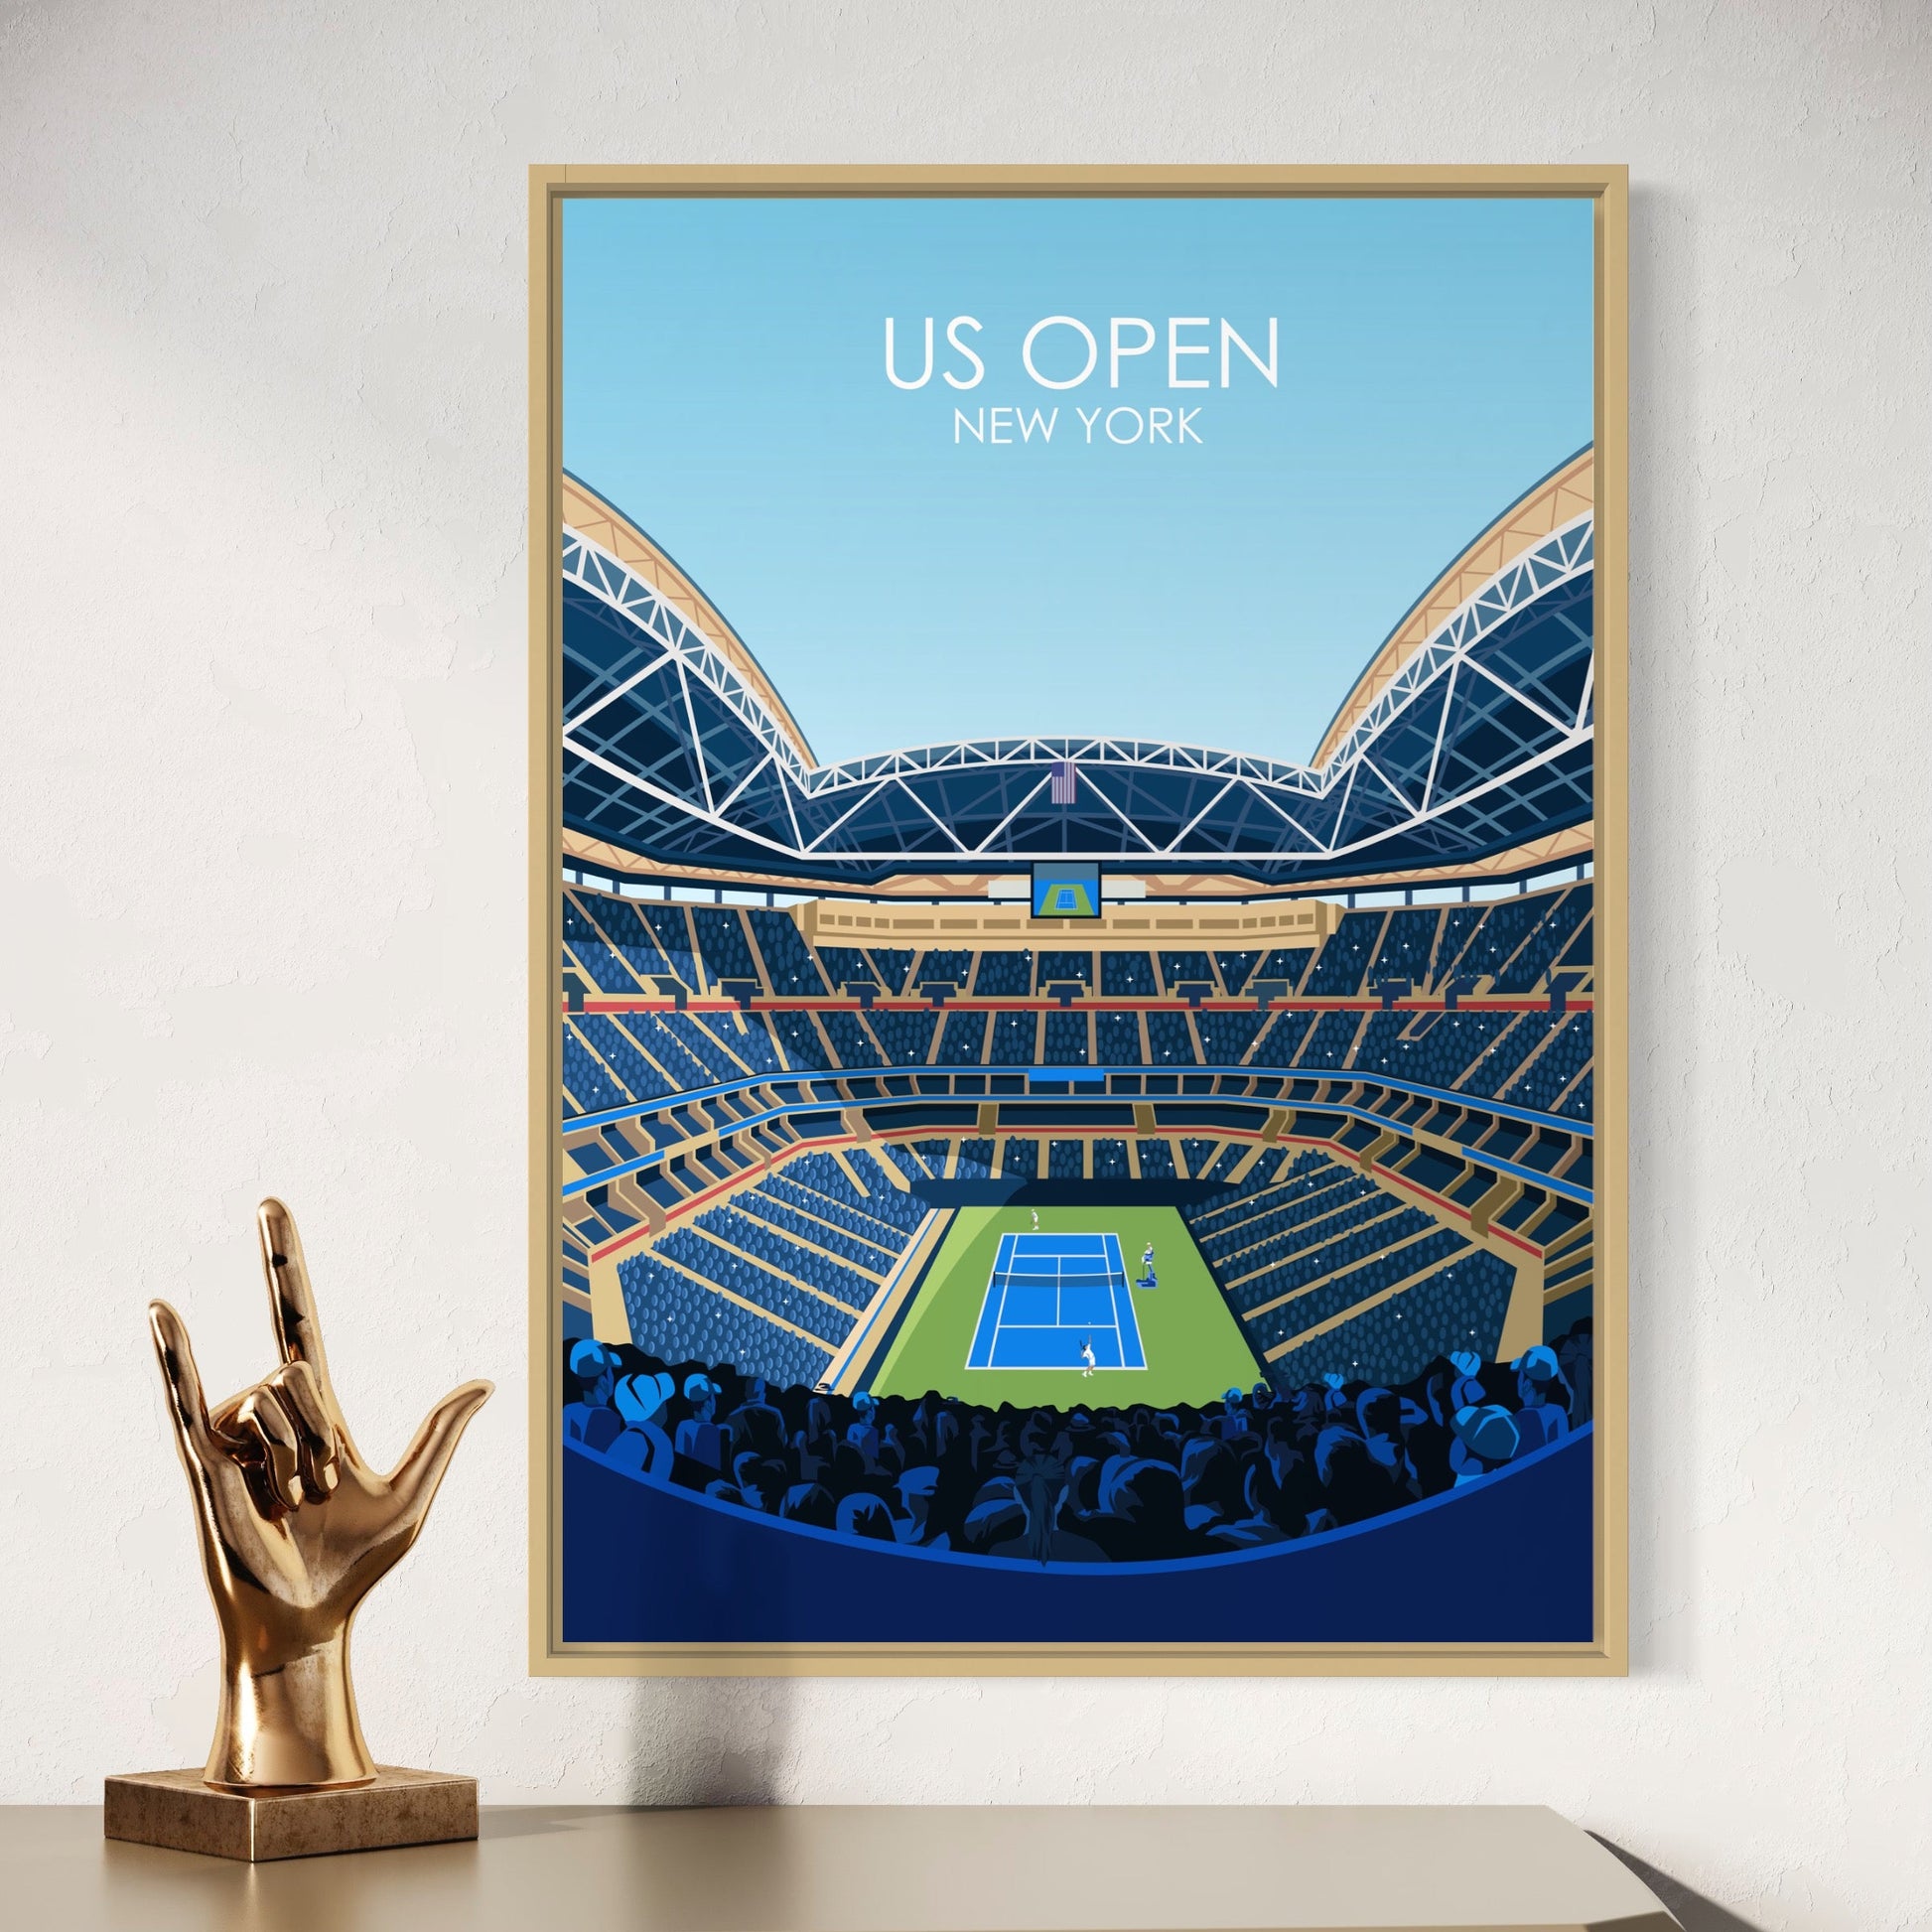 Arthur Ashe US Open tennis poster